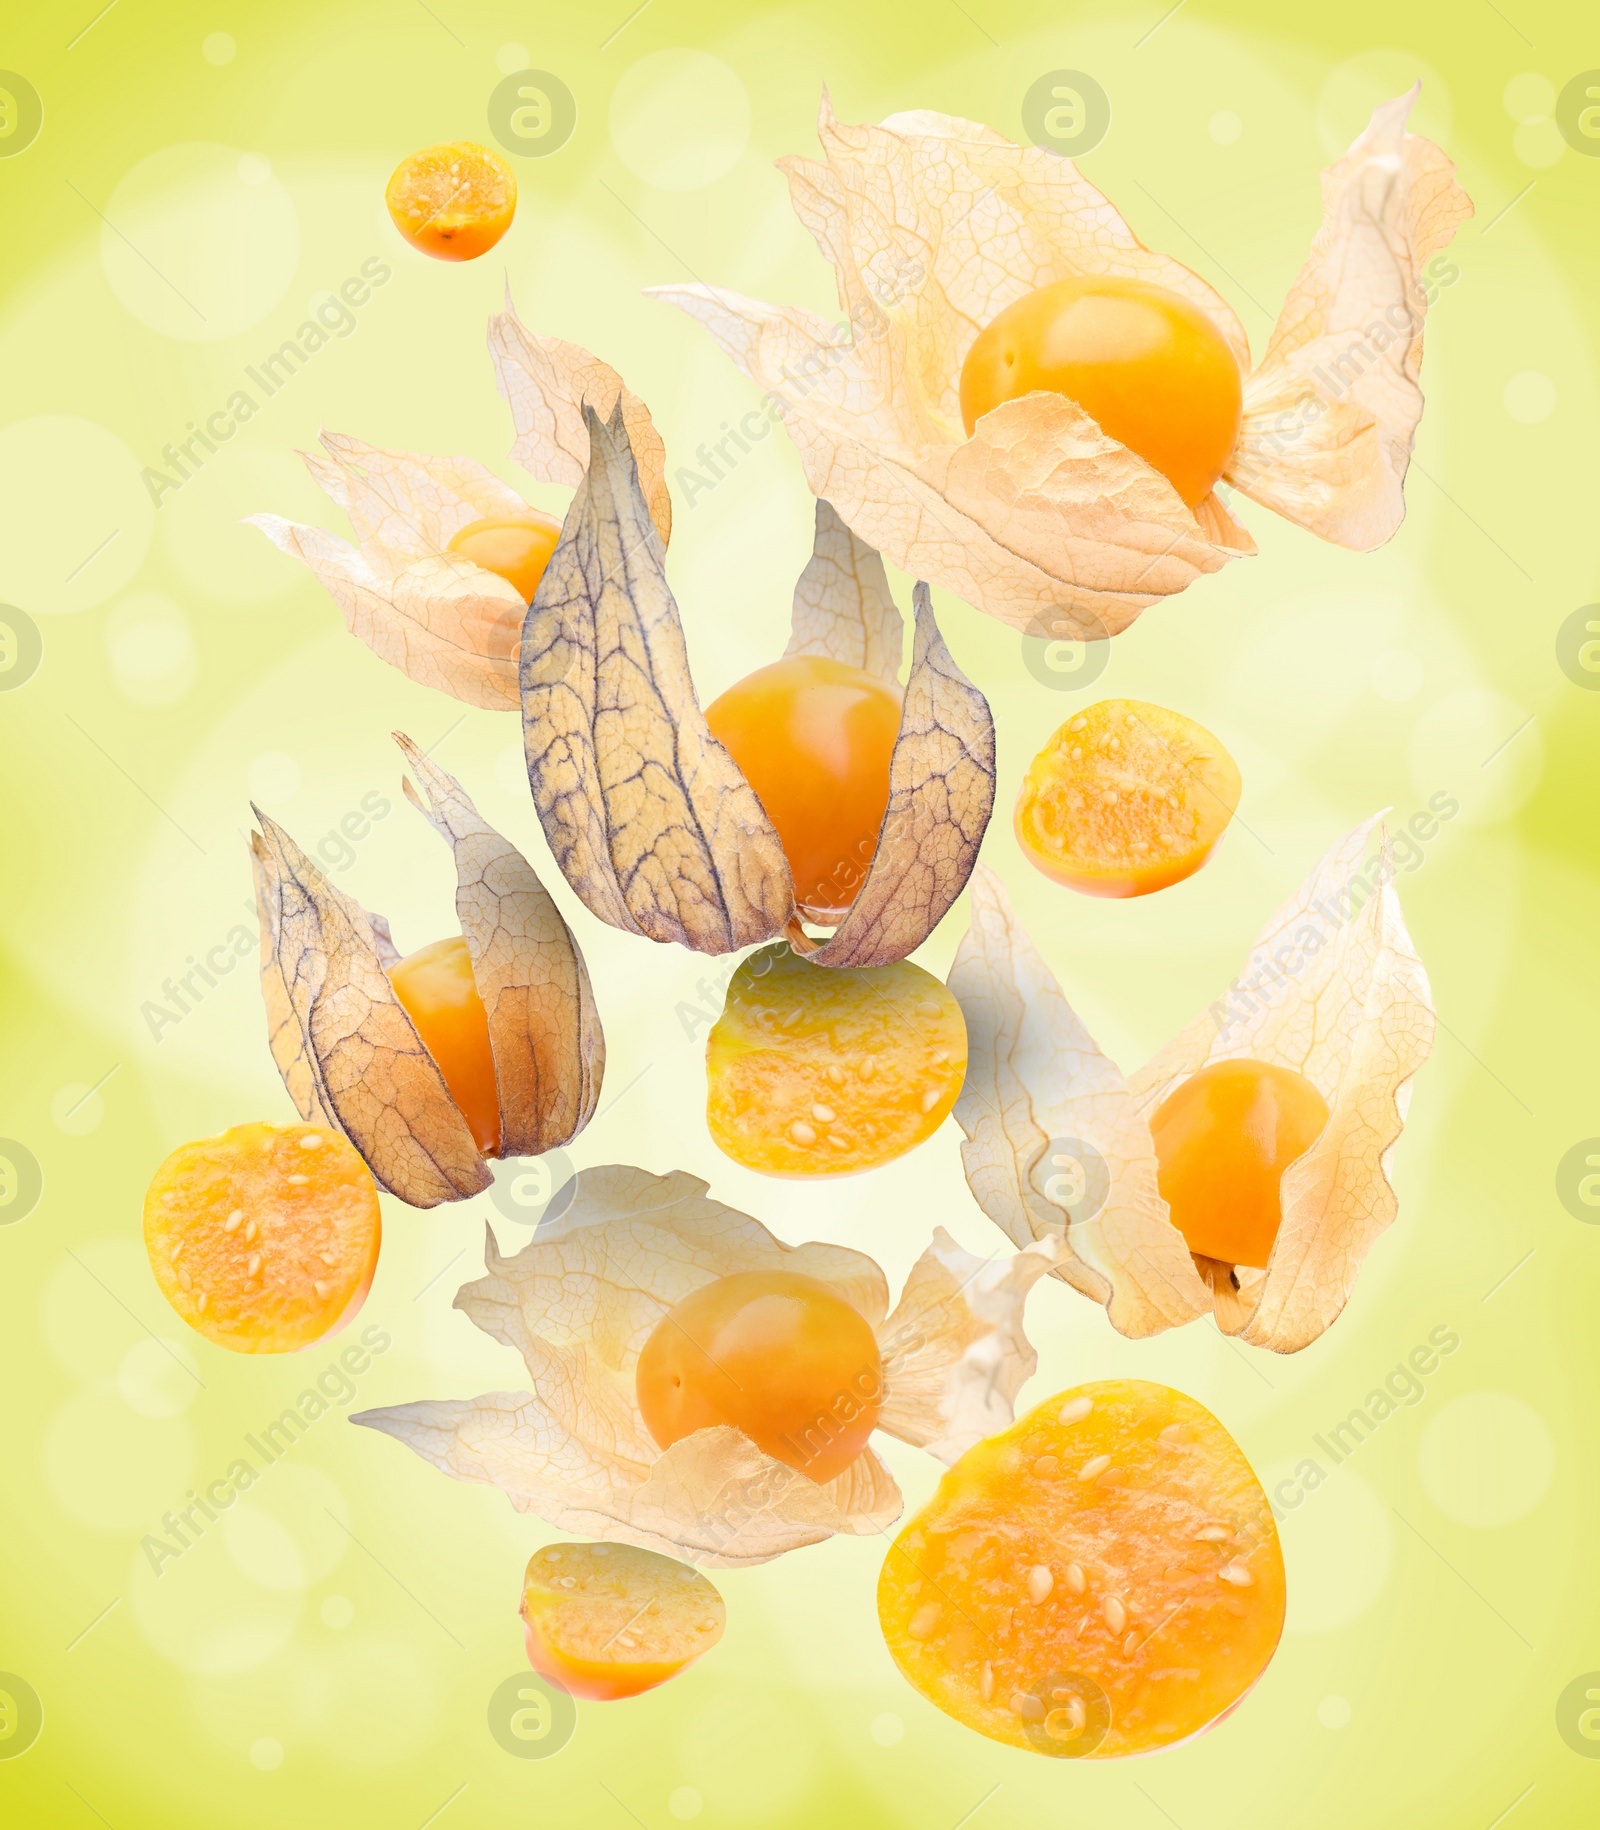 Image of Ripe orange physalis fruits with calyx falling on light green background